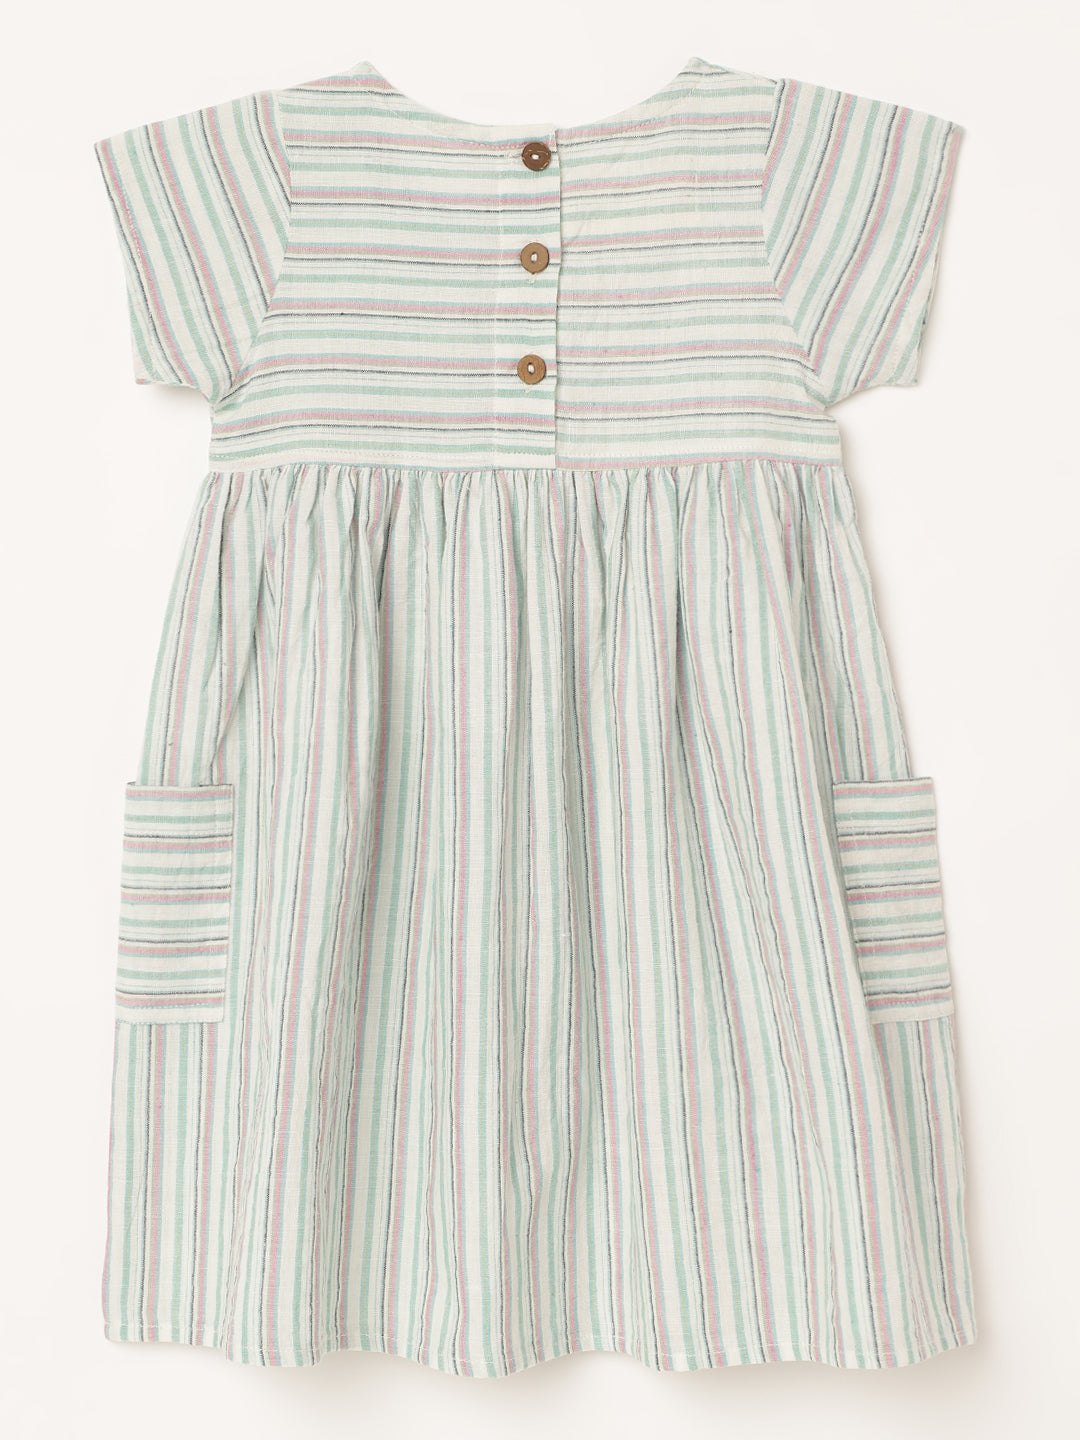 Girls Pocket dress | Handloom cotton |1Yr to 8 Yrs